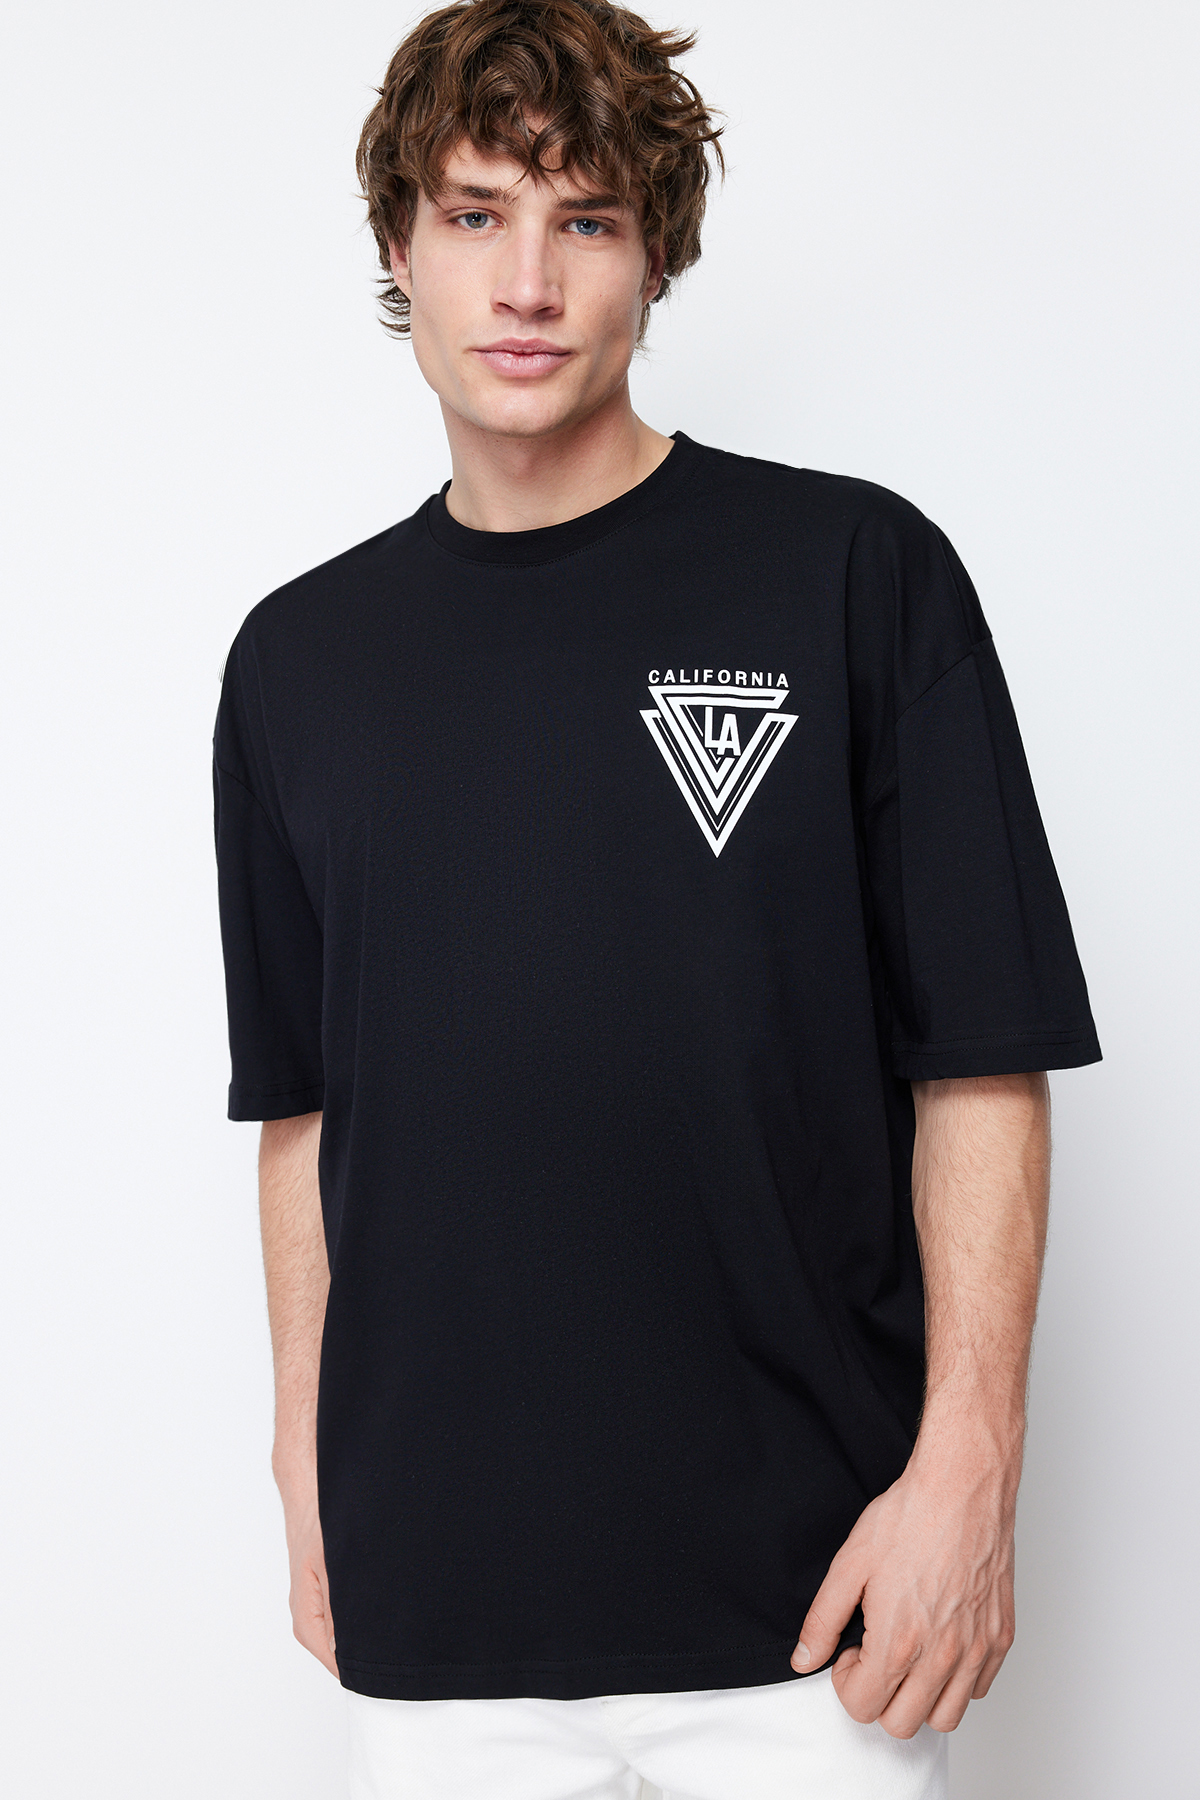 Trendyol Men's Black Oversize/Wide-Fit Short Sleeve City Printed 100% Cotton T-Shirt